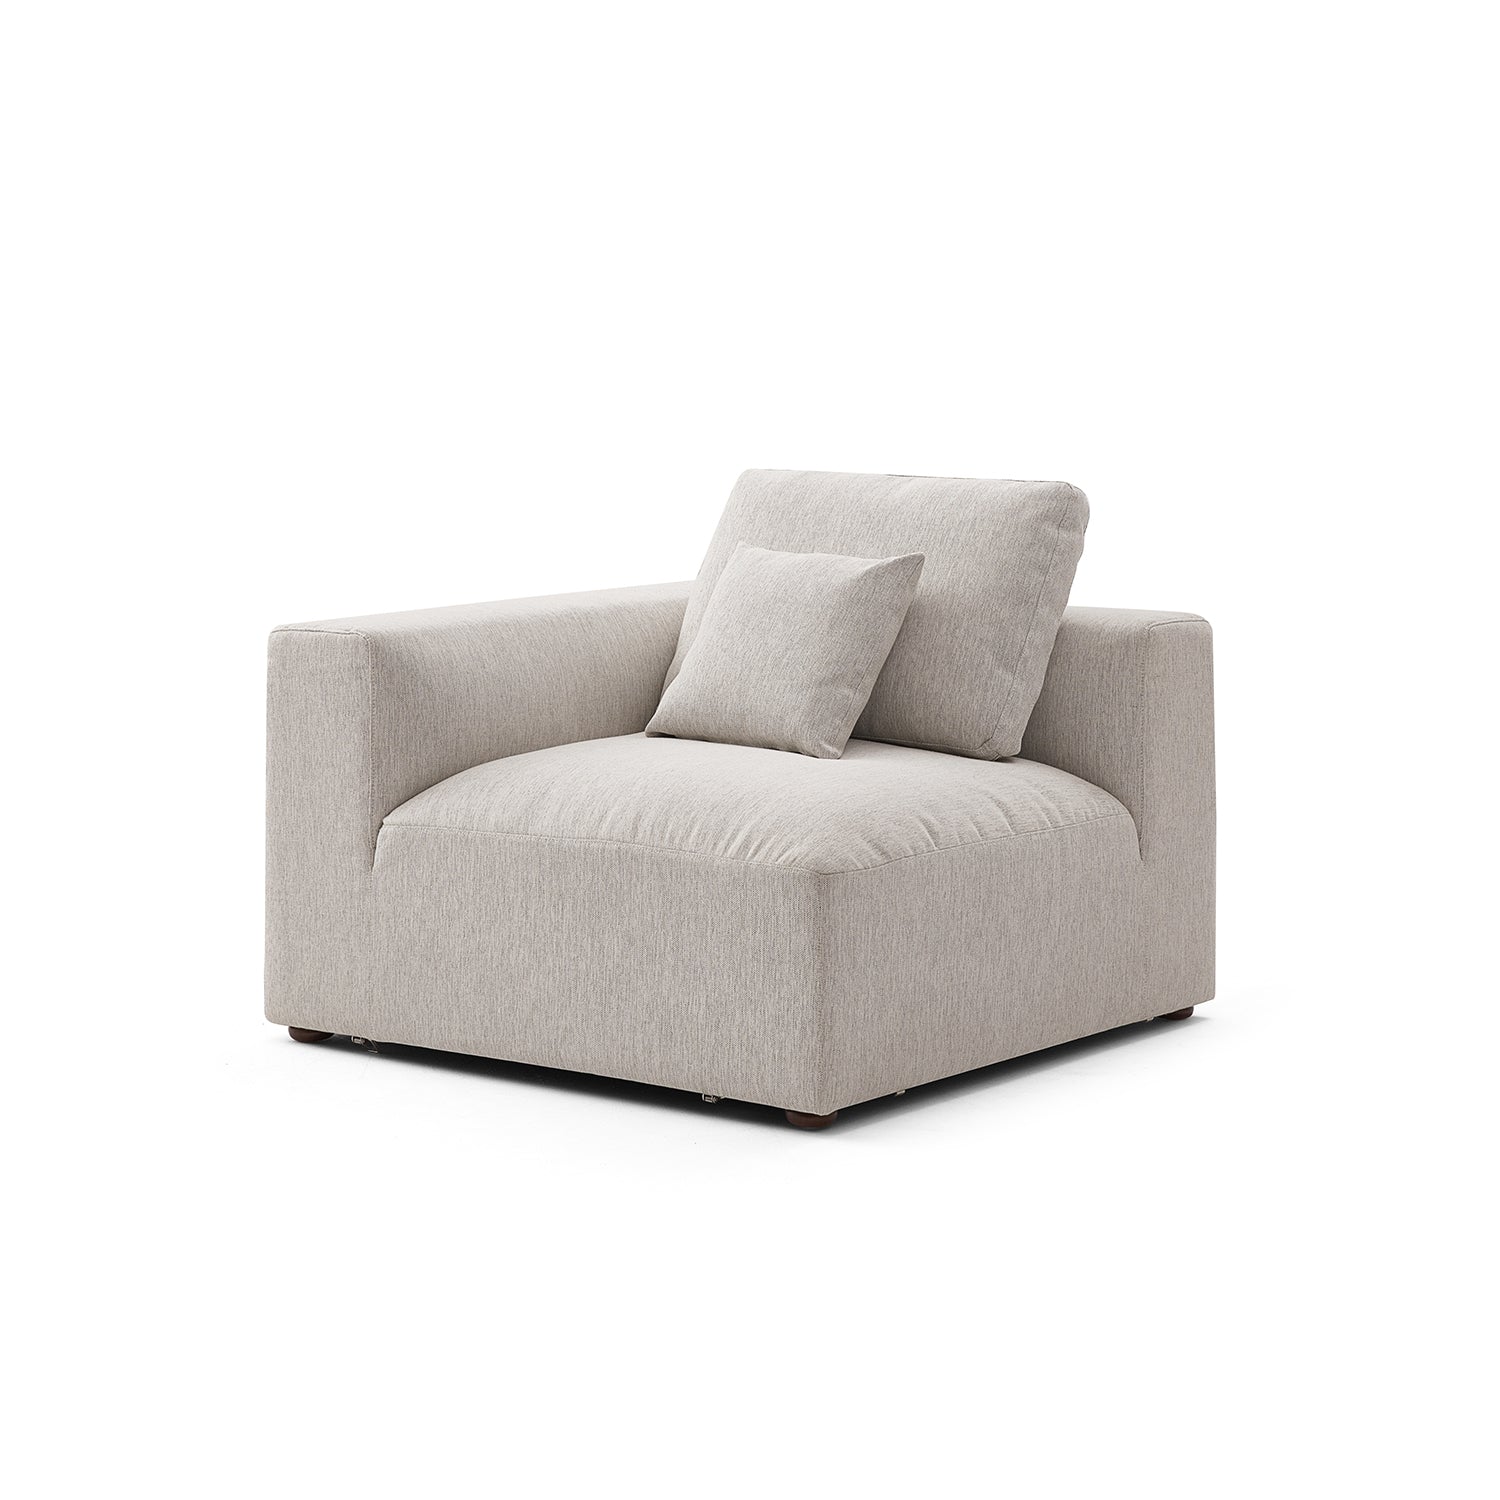 The 5th - Corner Seat, Modular Sofa, Foundry | Valyou Furniture 